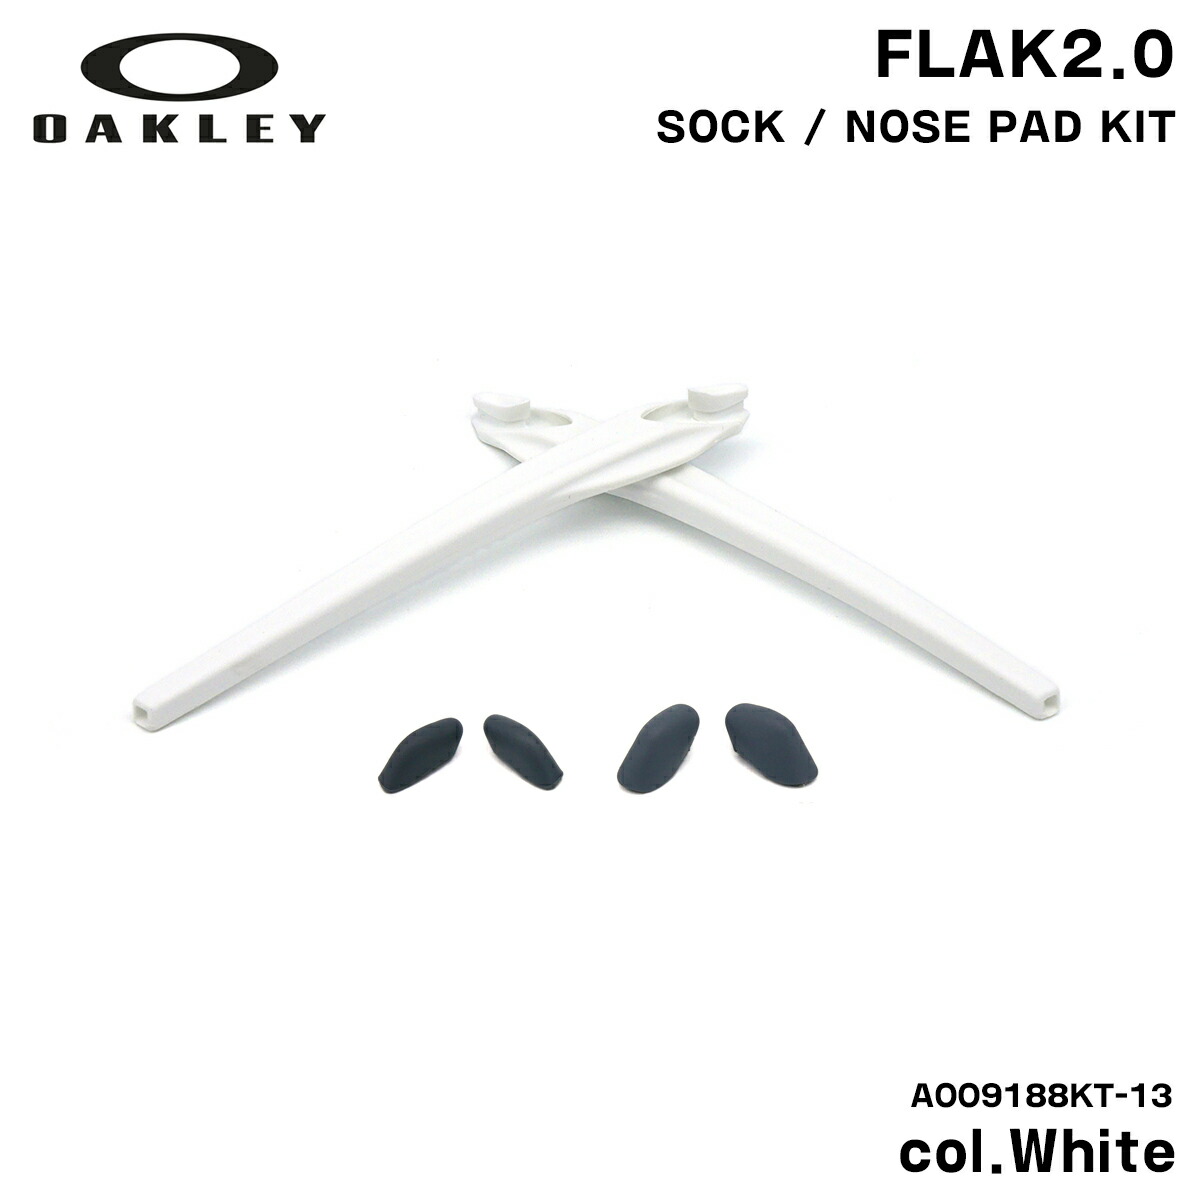  Oacley earsock nose pad f rack 2.0 exchange parts domestic regular goods AOO9188KT 13 white OAKLEY OO9271 FLAK2.0 (A) OO9188 FLAK2.0 XL